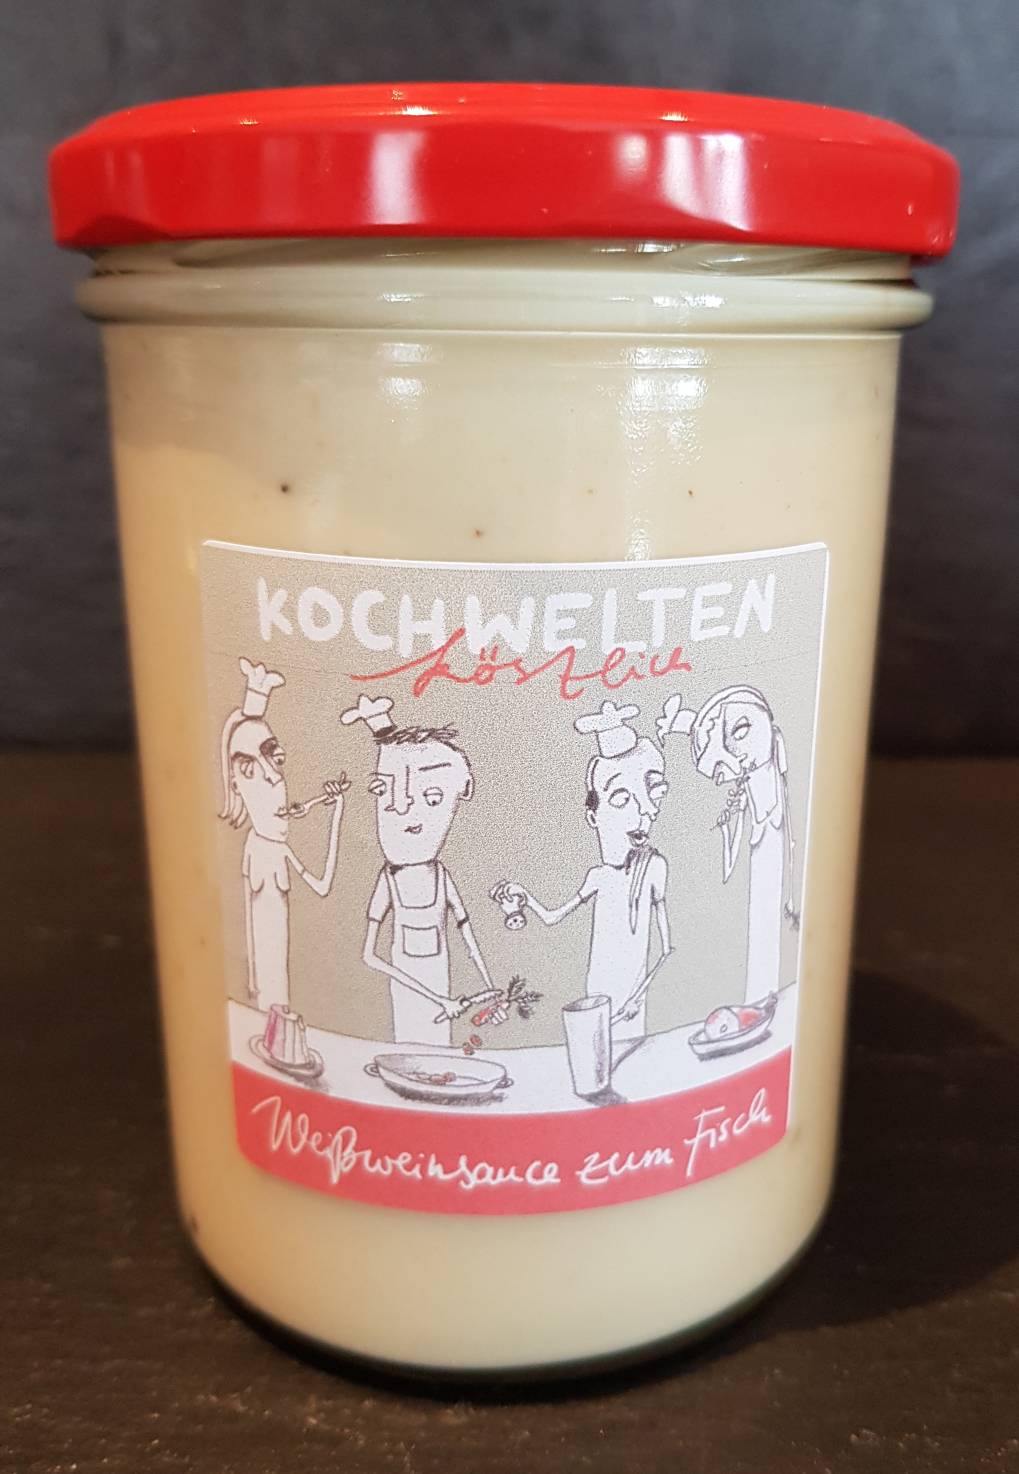 Kochschule Sonja Lenz Stuttgart Kochwelten Köstlich Weißweinsauce zum Fisch